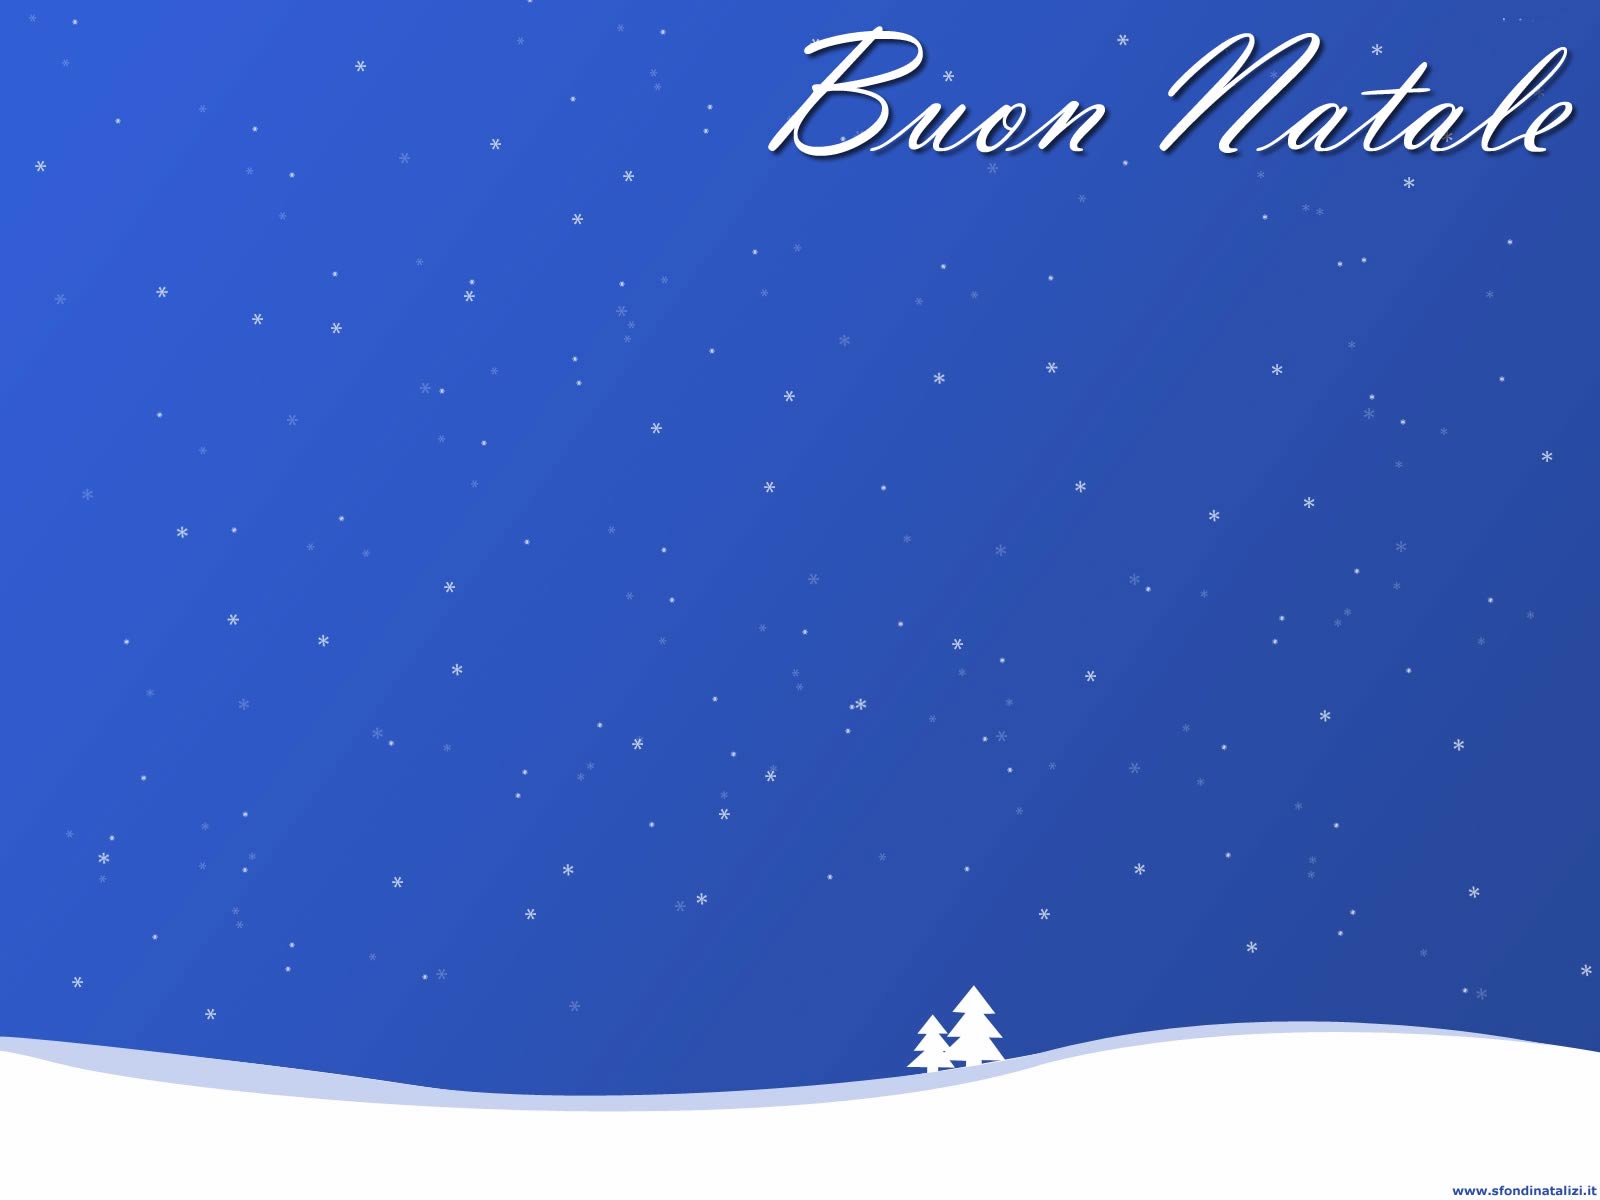 Buon Natale Translated From Italian As Merry Christmas Vector